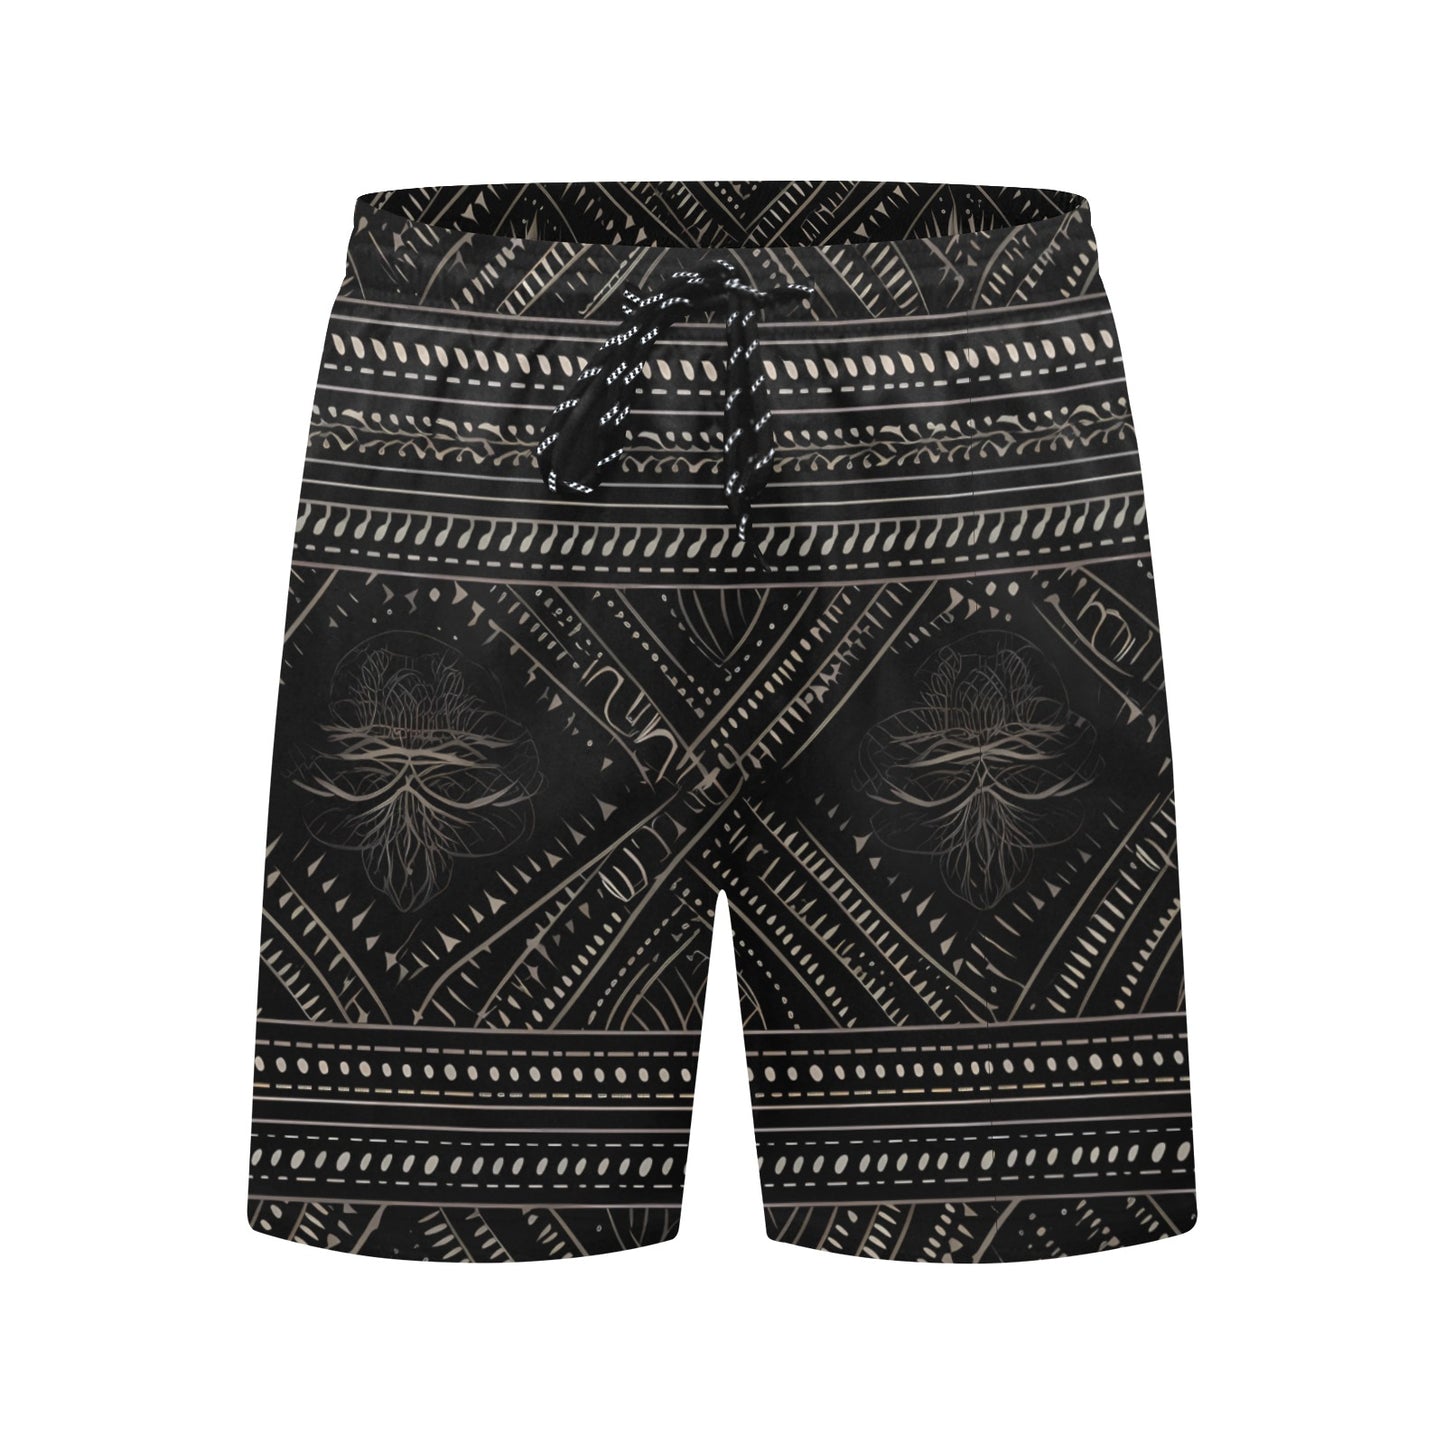 Gothic Black Beach Shorts